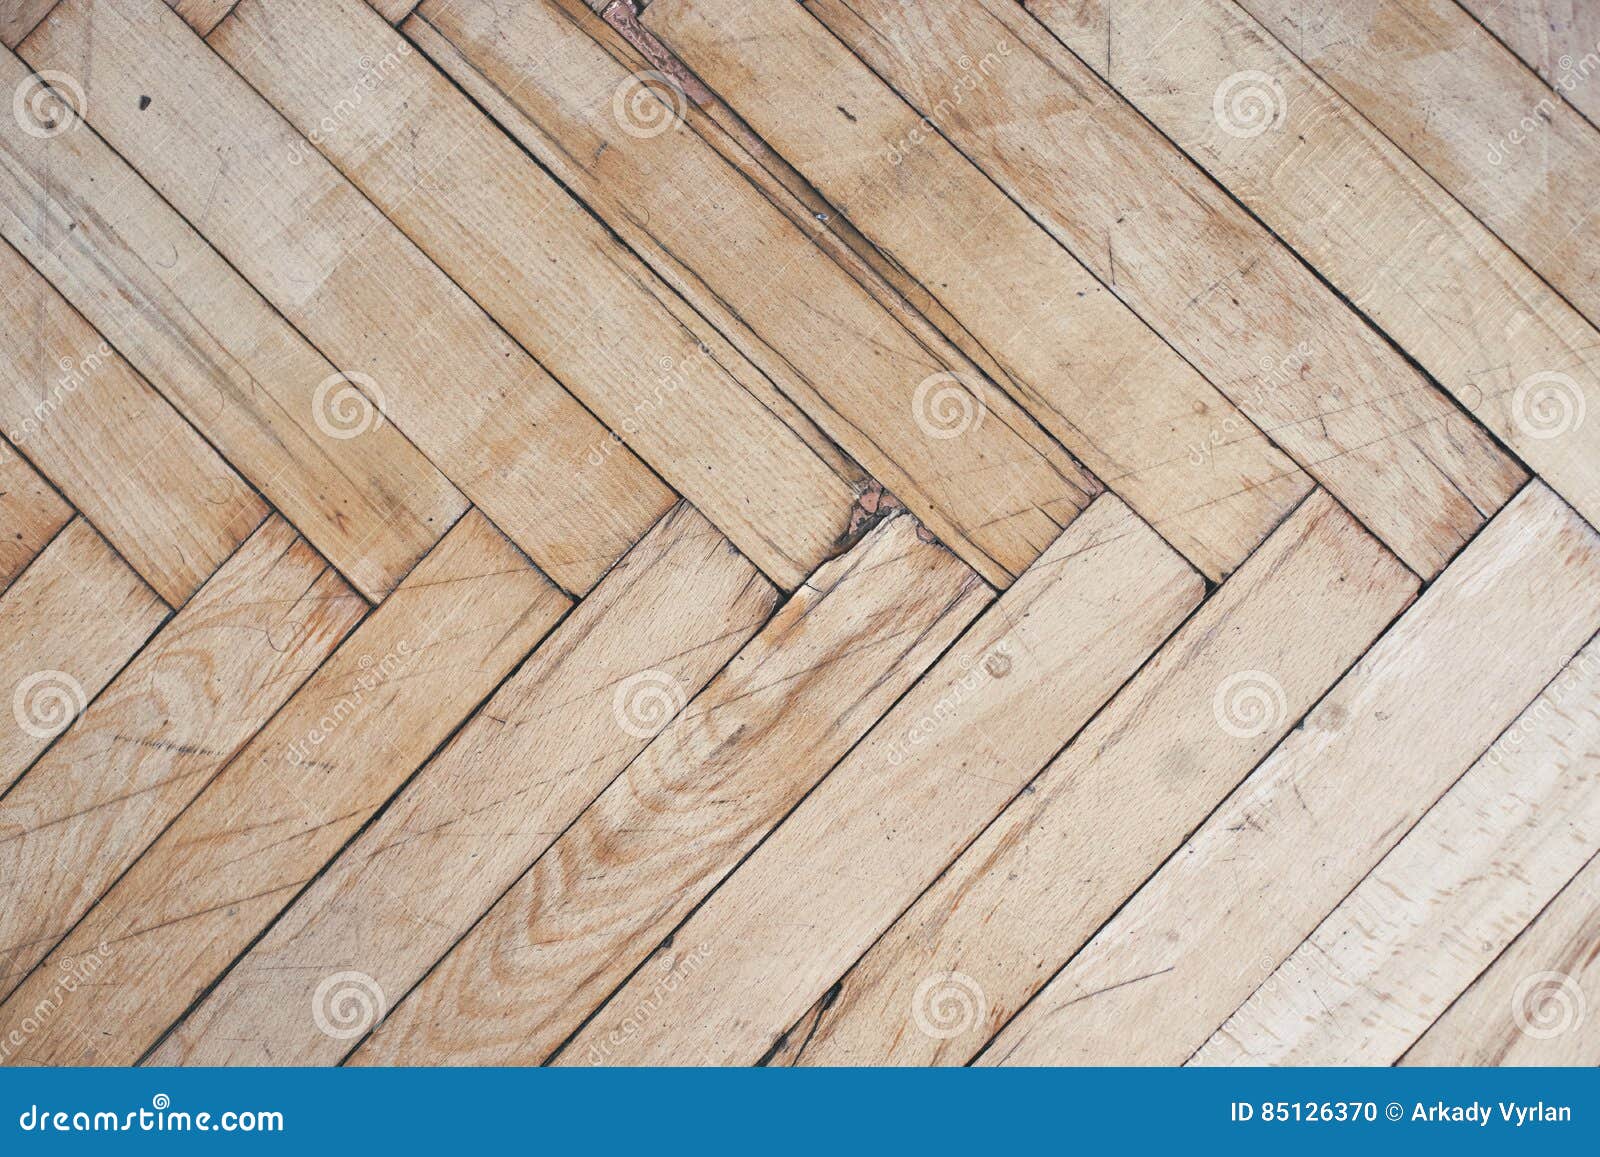 Rustic Distressed Wooden Floor Stock Photo Image Of Finewood